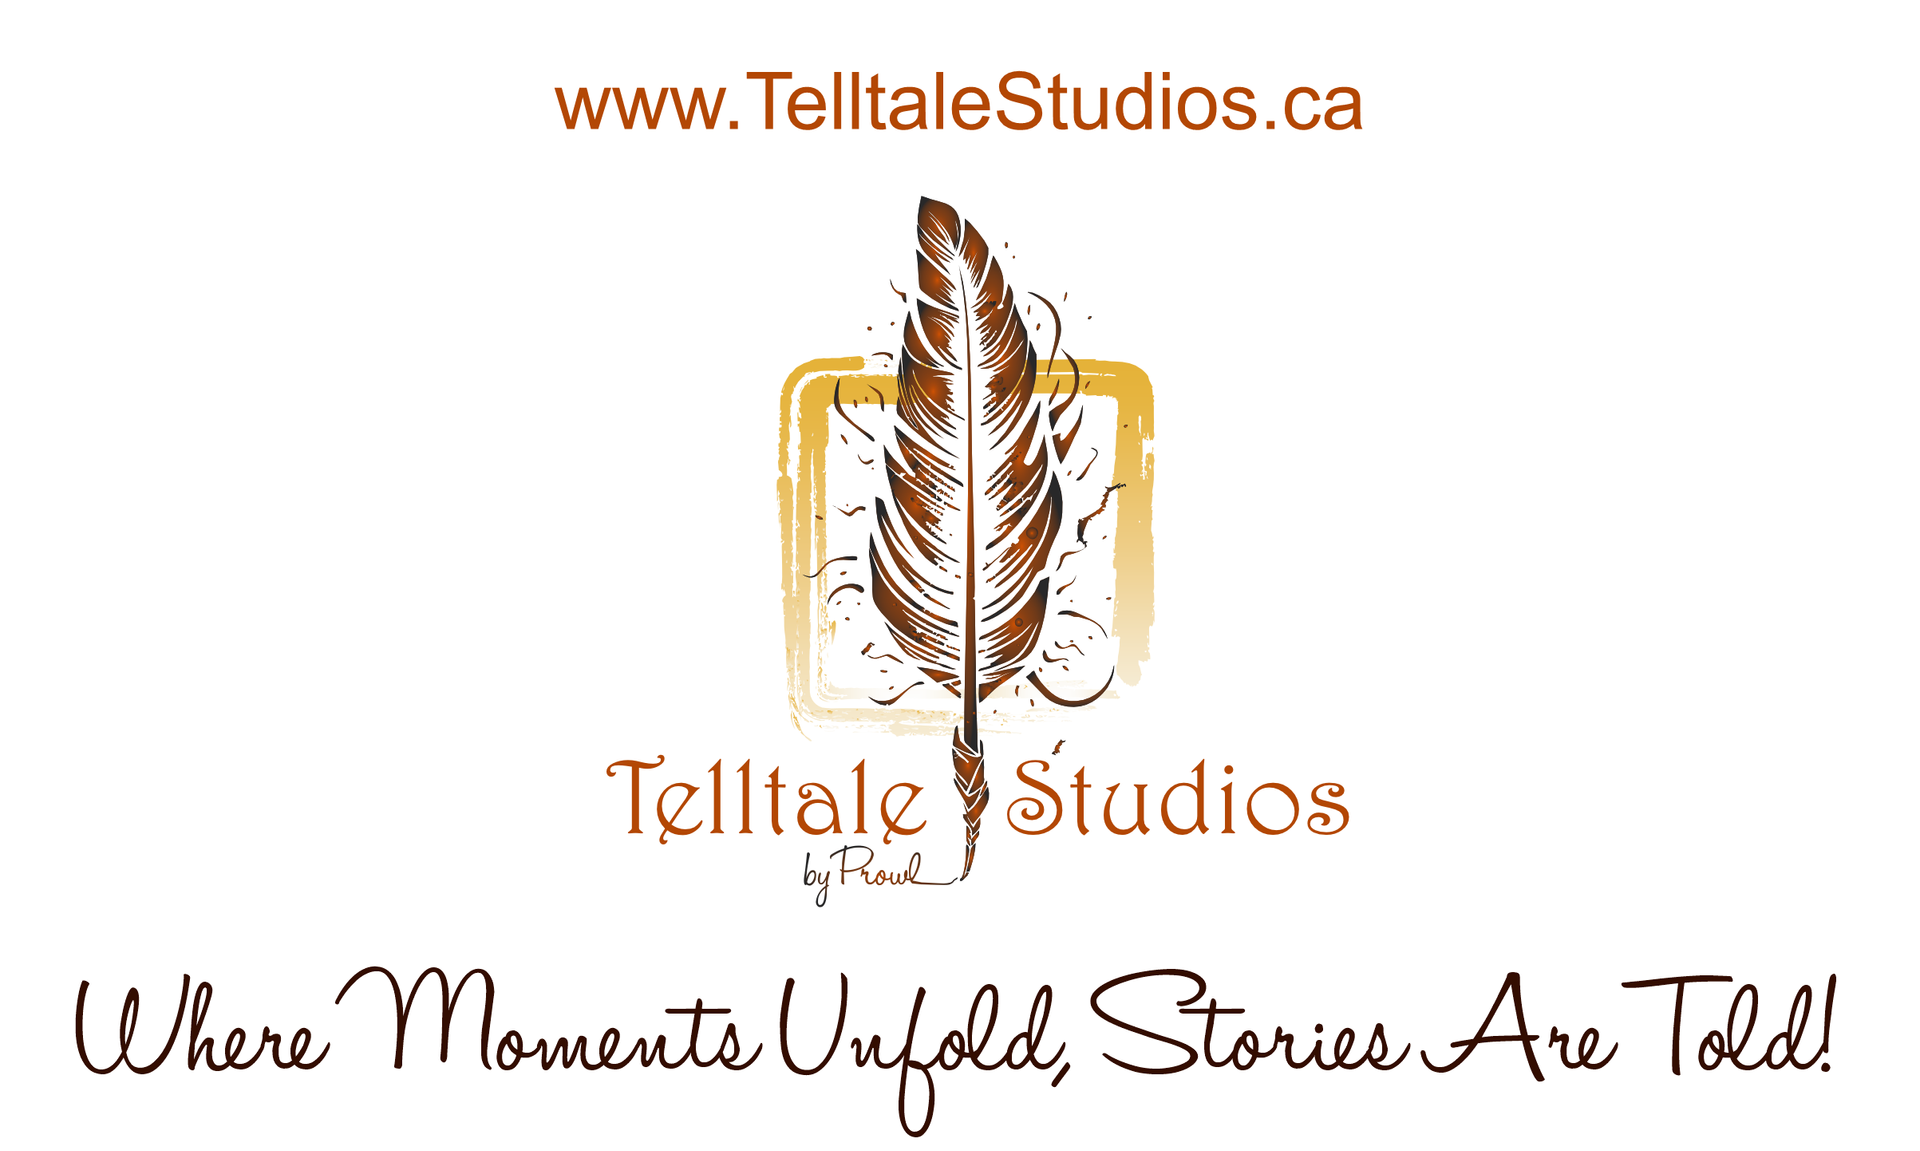 telltale studios logo and tagline